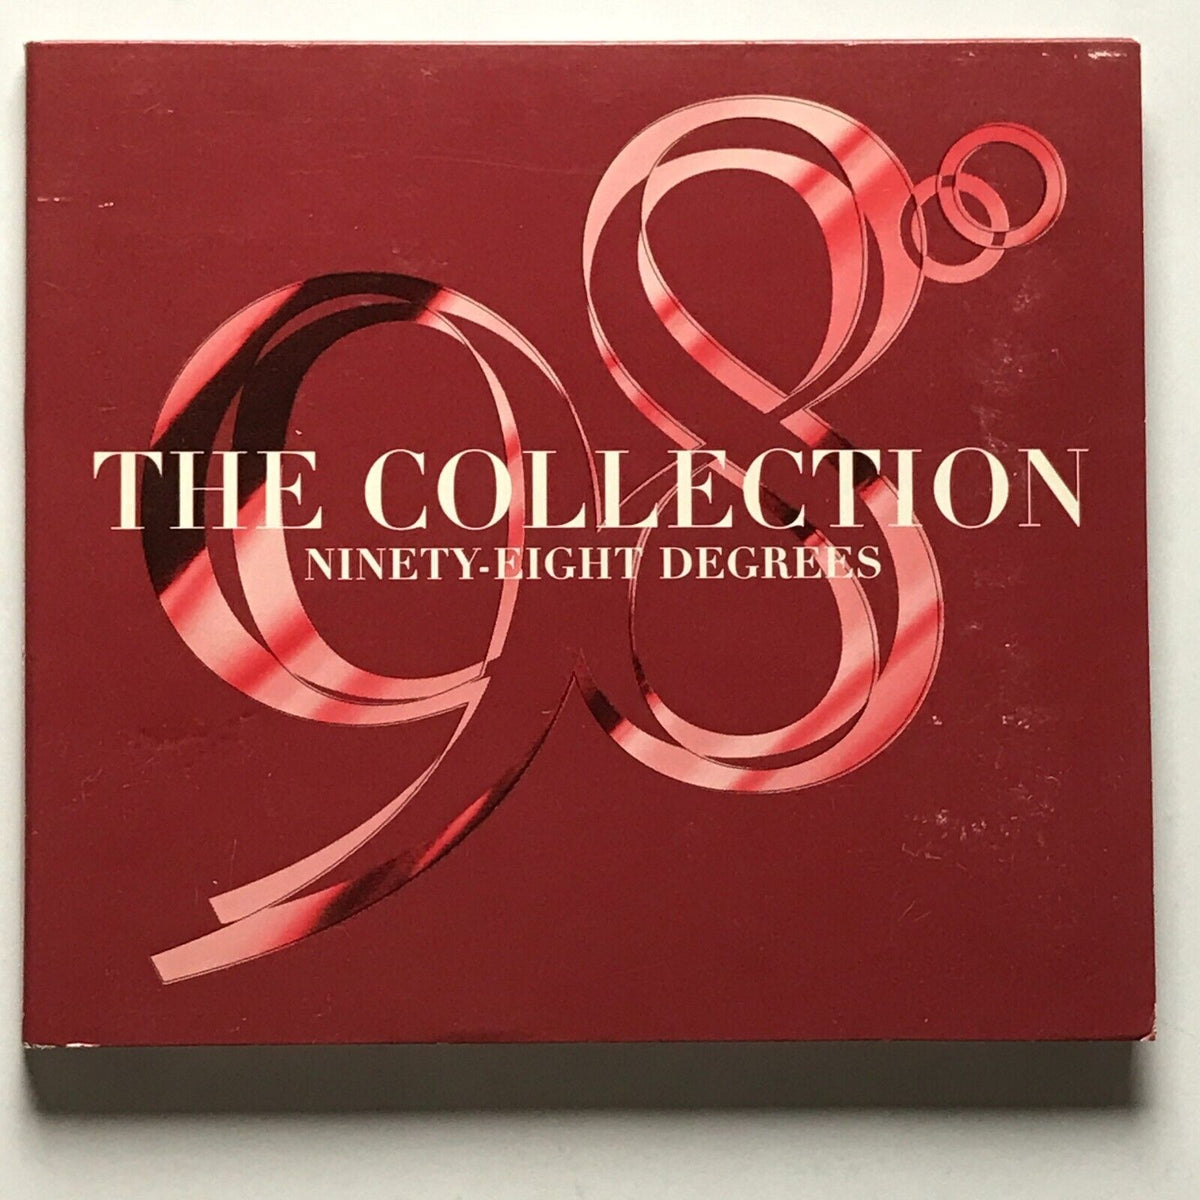 The Collection (98 Degrees album) - Wikipedia